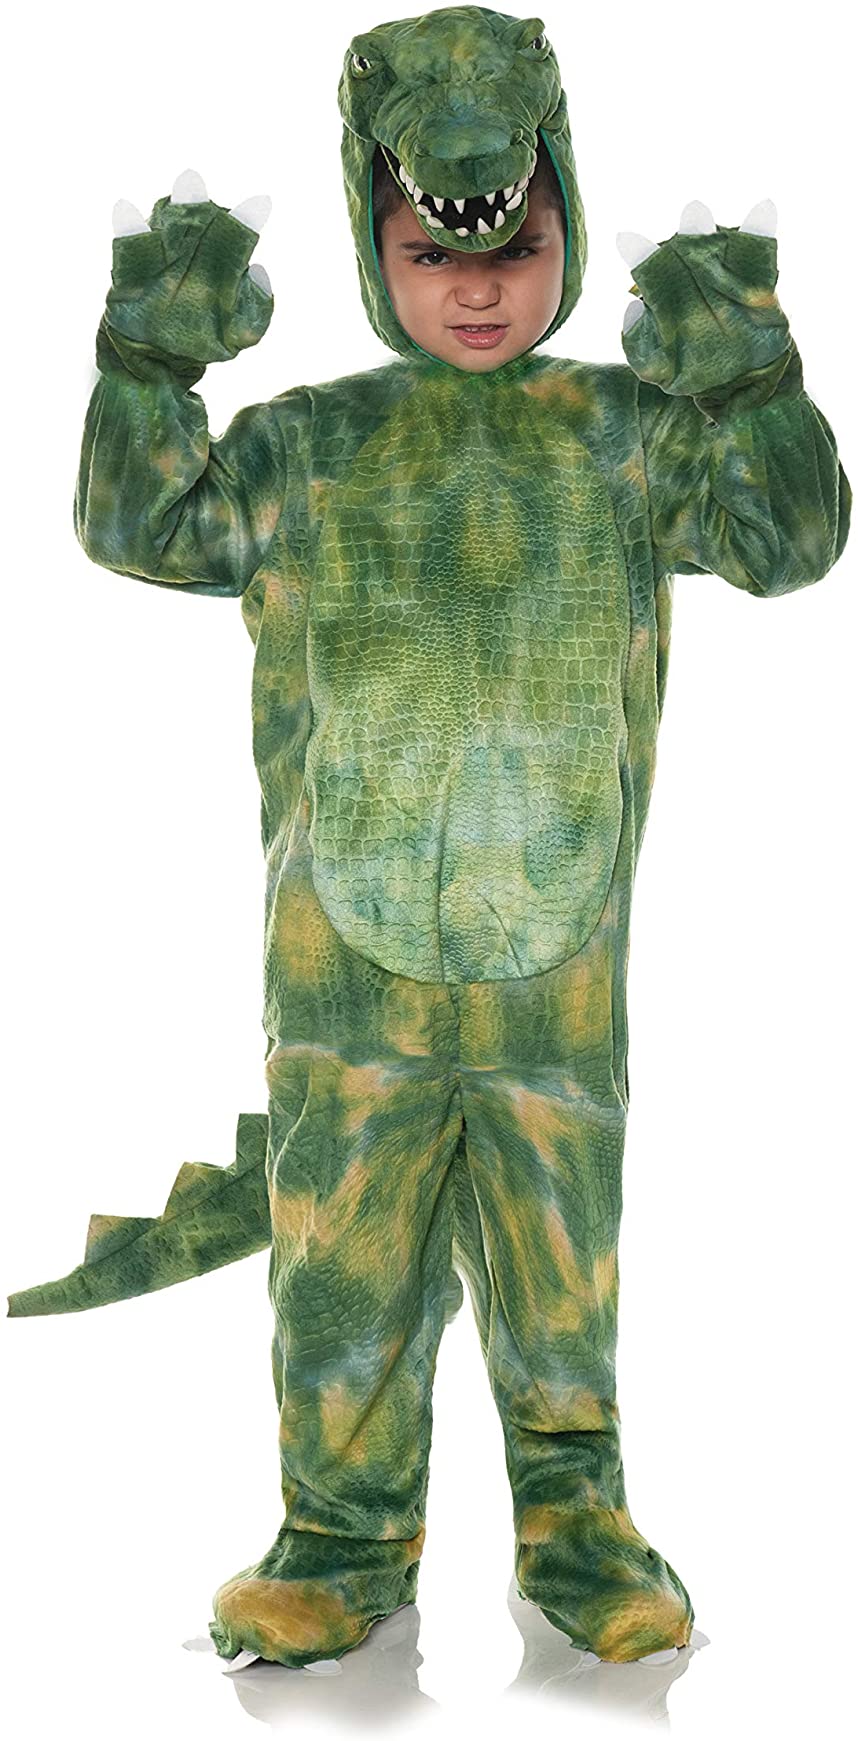 Alligator Child Costume